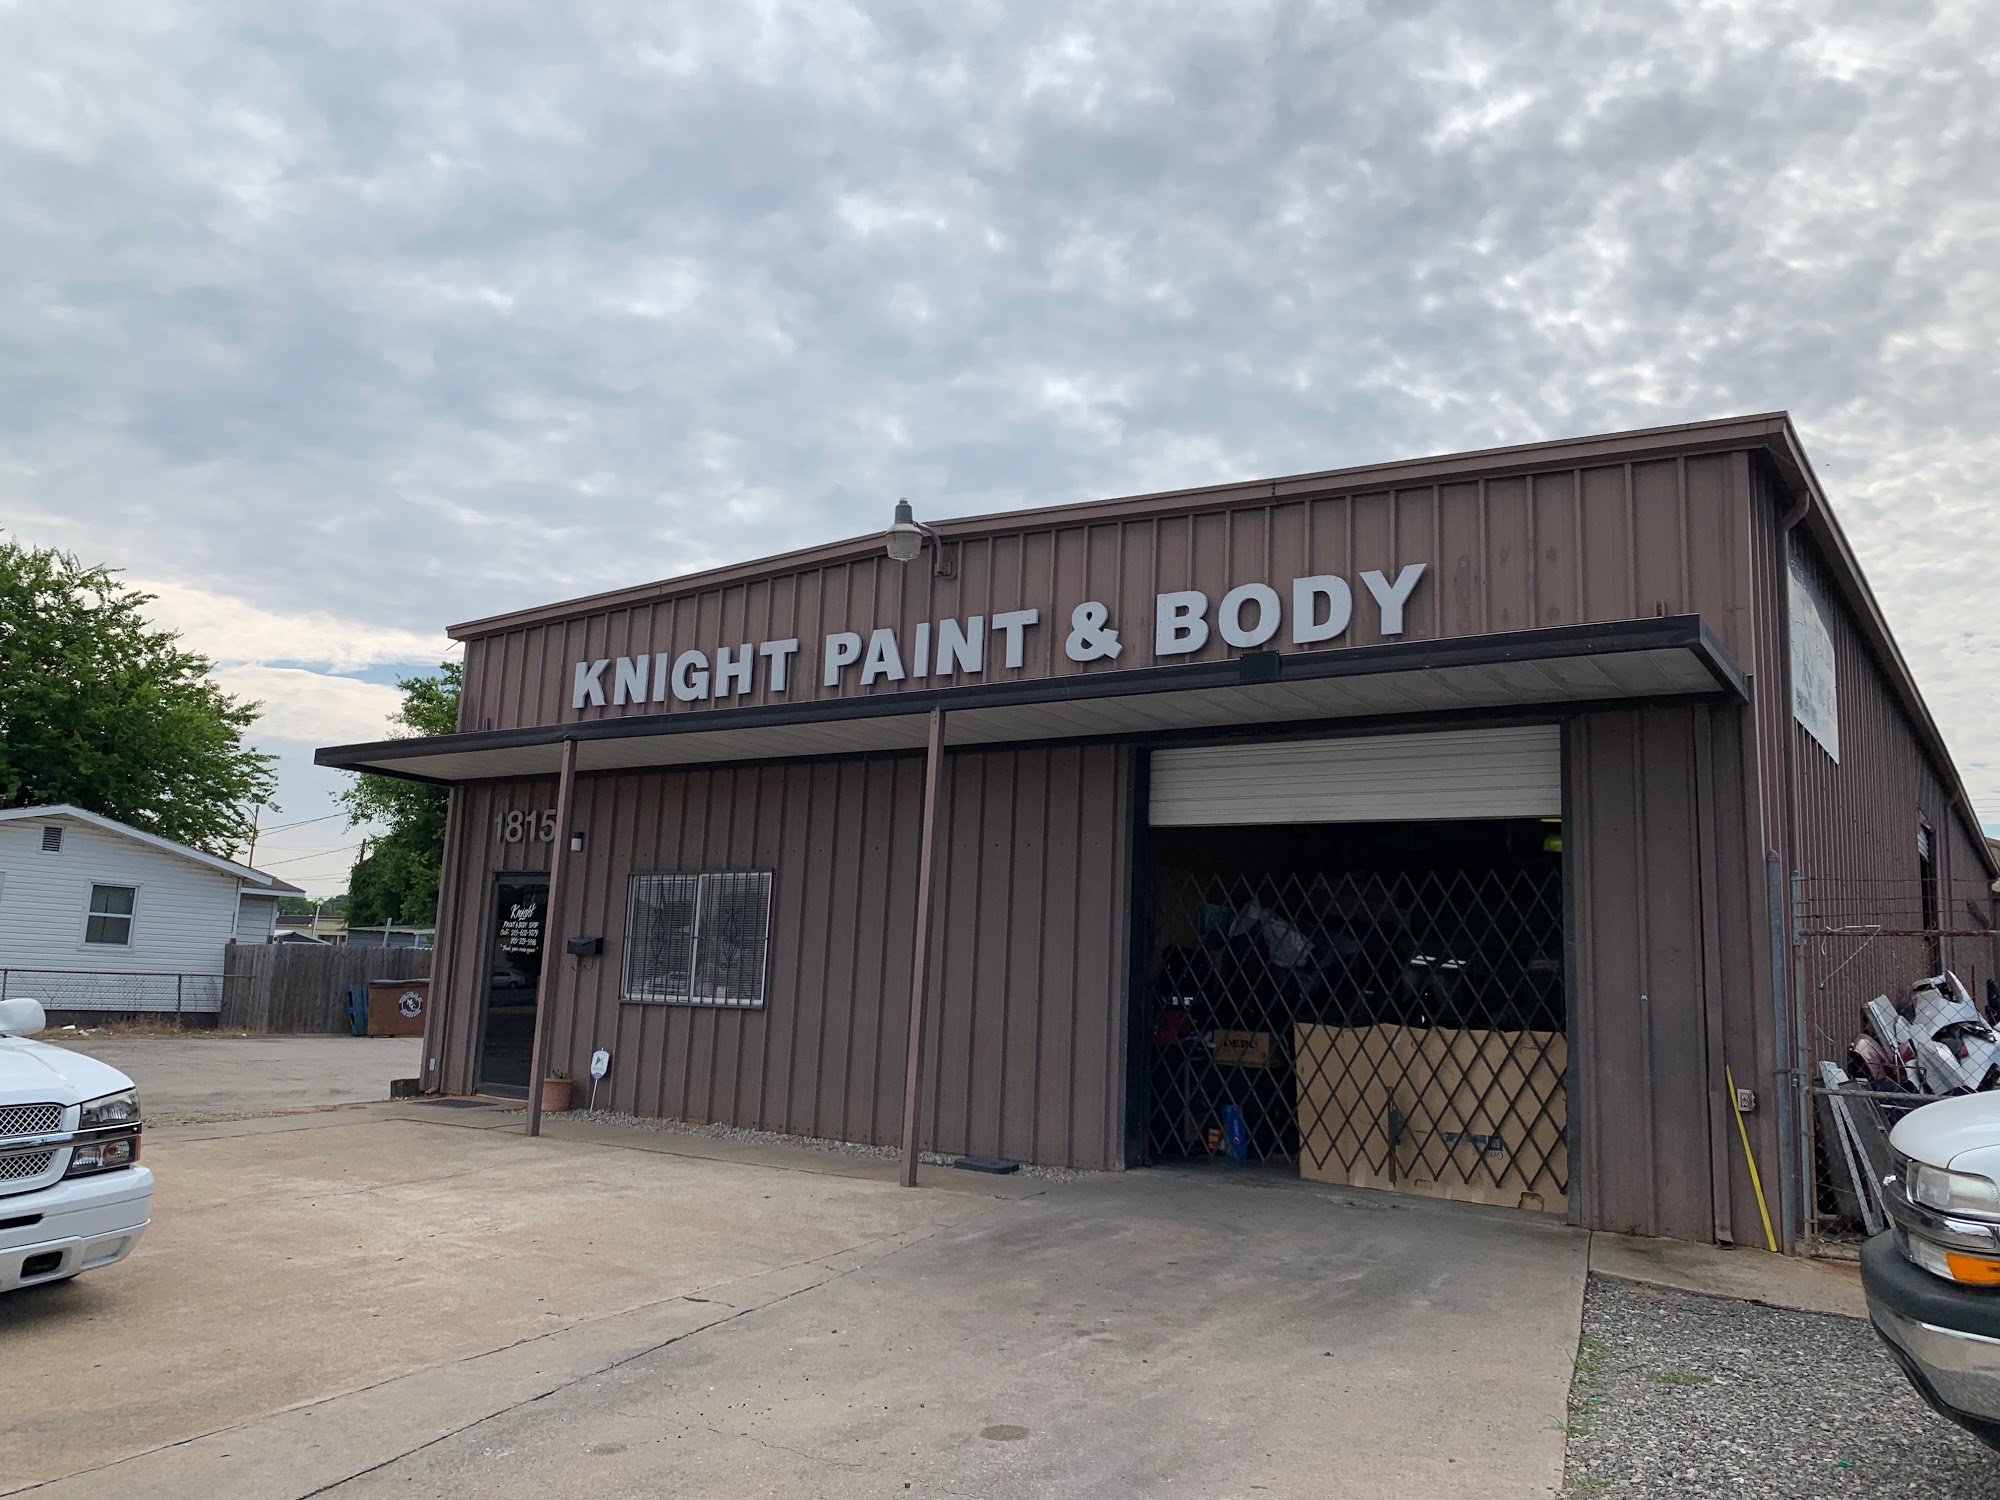 Knight Paint & Body